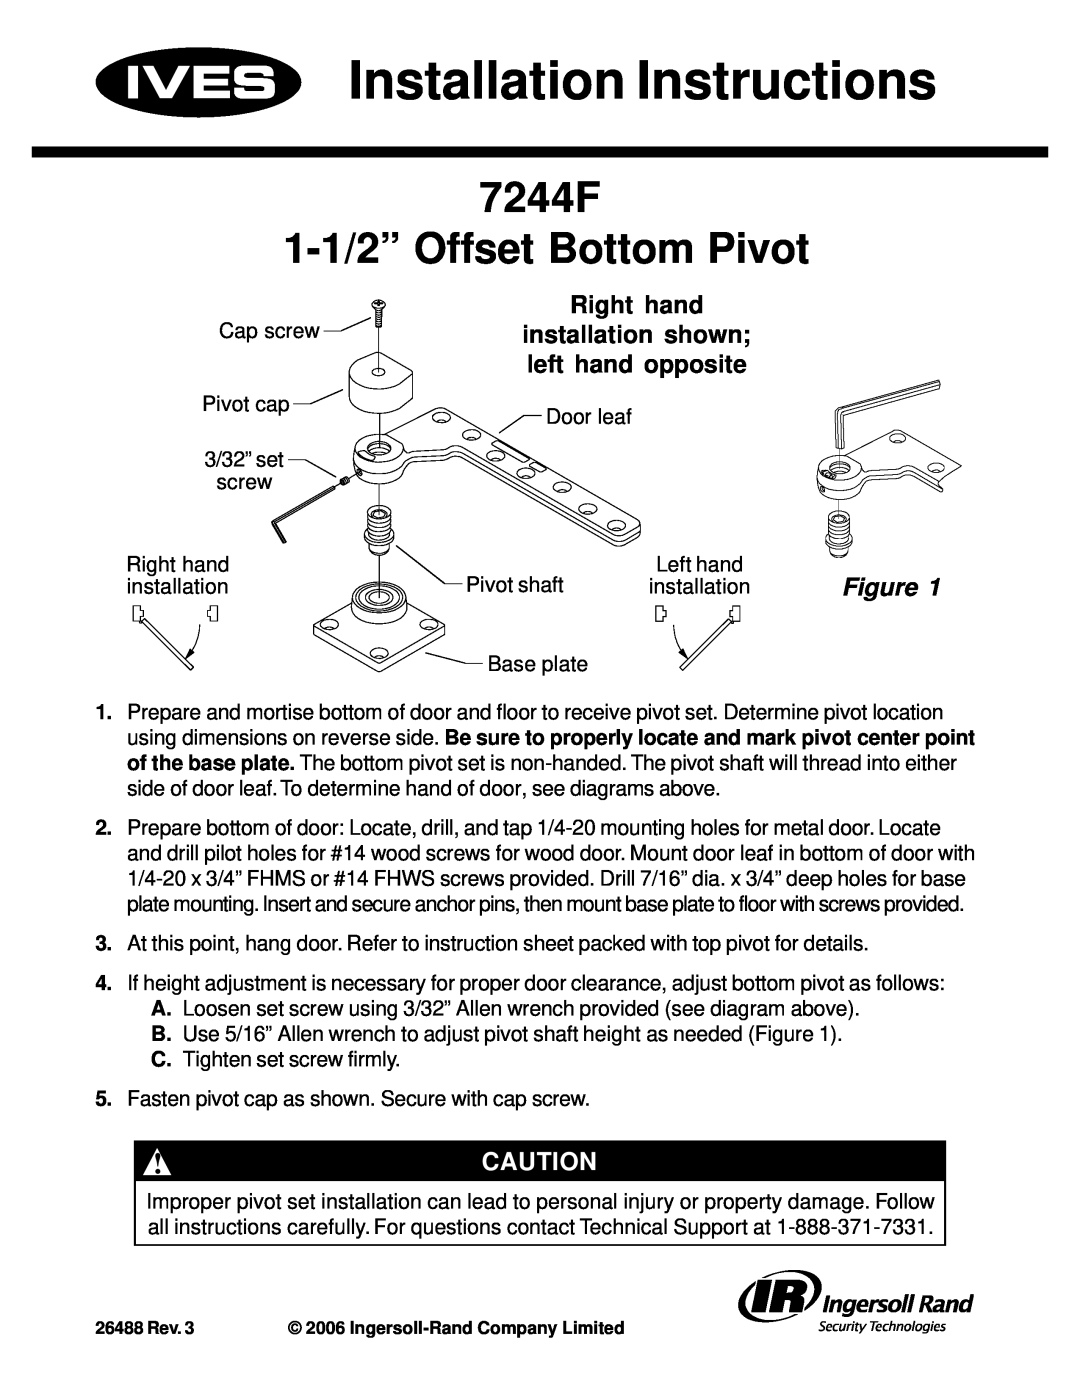 Ives 7244F installation instructions Right hand, left hand opposite, Installation Instructions, 1-1/2”Offset Bottom Pivot 